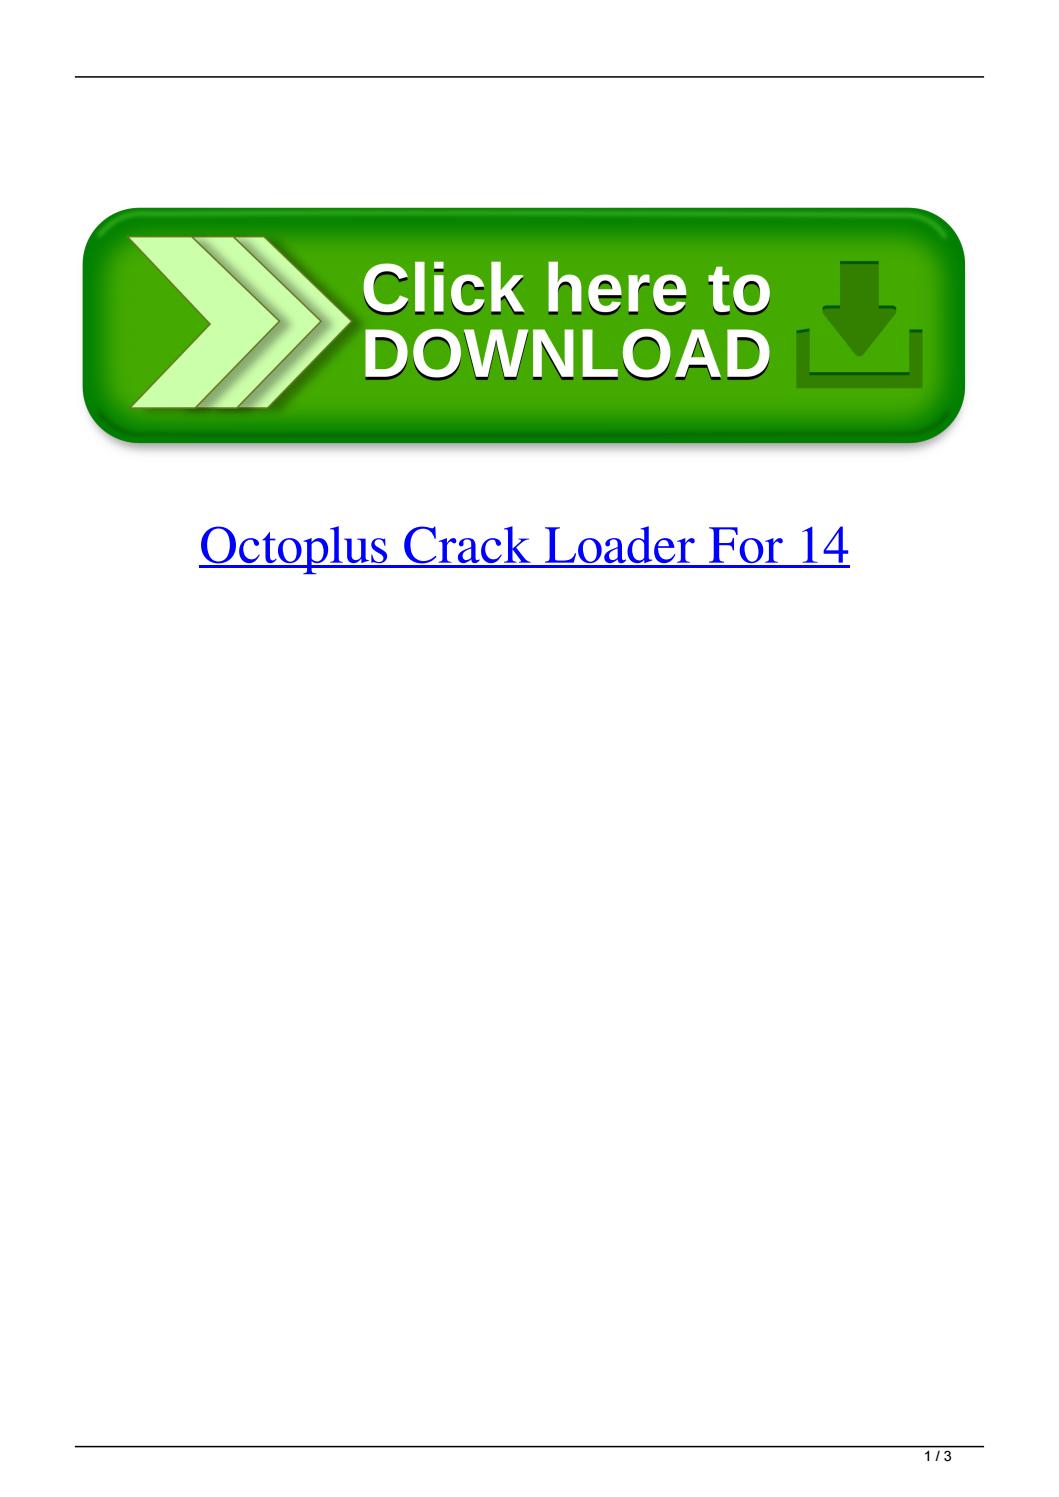 octopus lg software crack